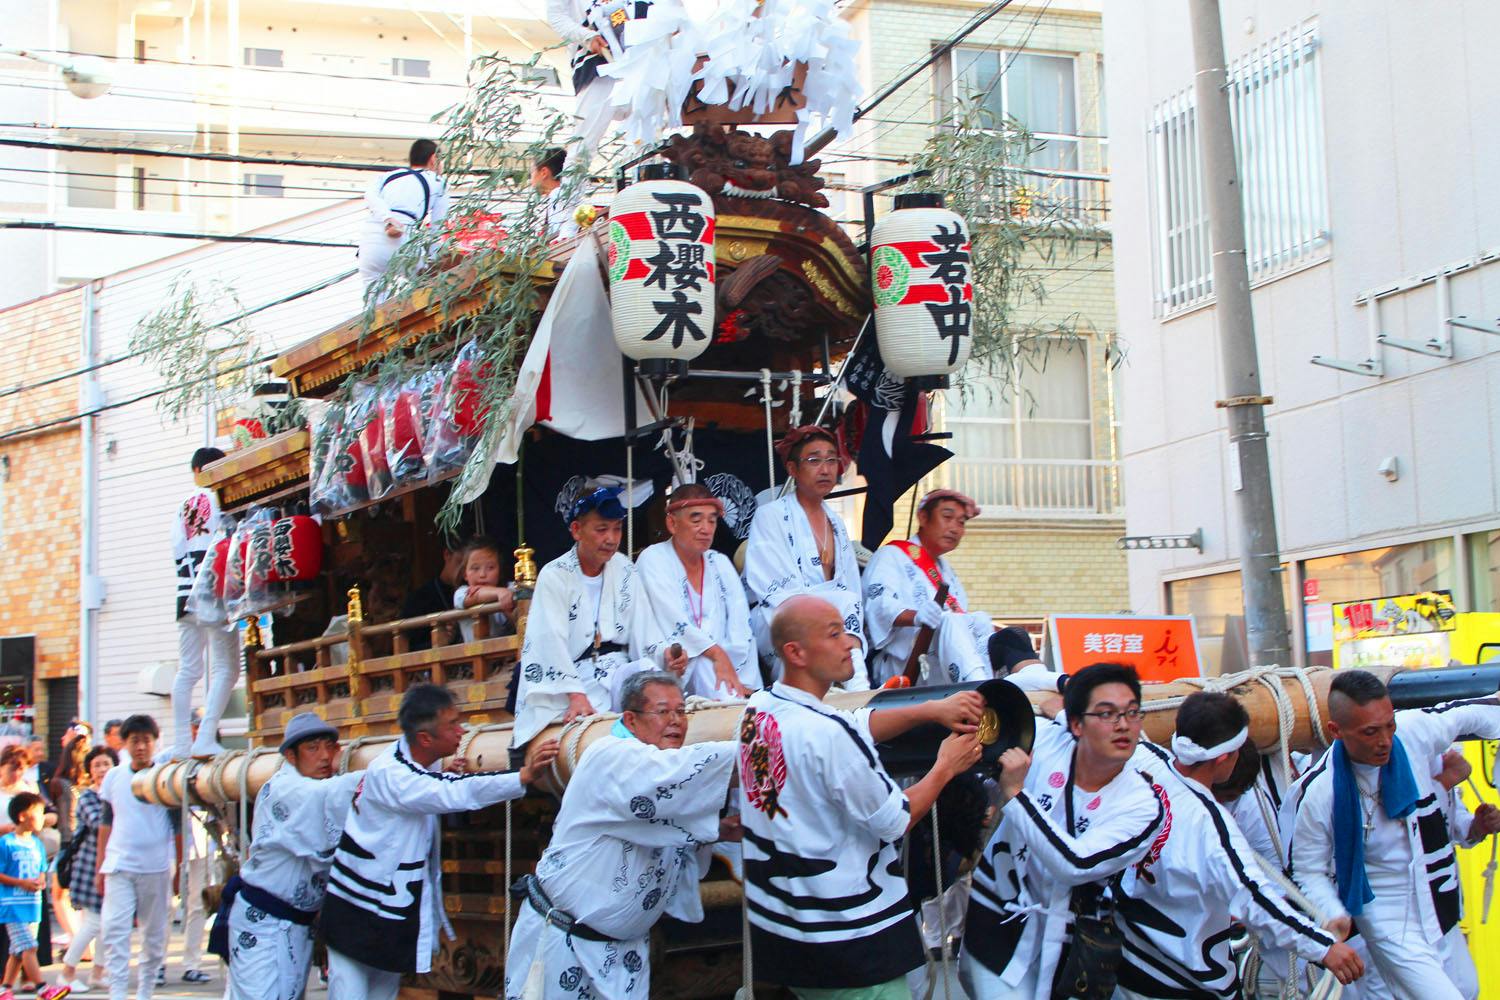 danjiri matsuri - traditional cart-pulling festival